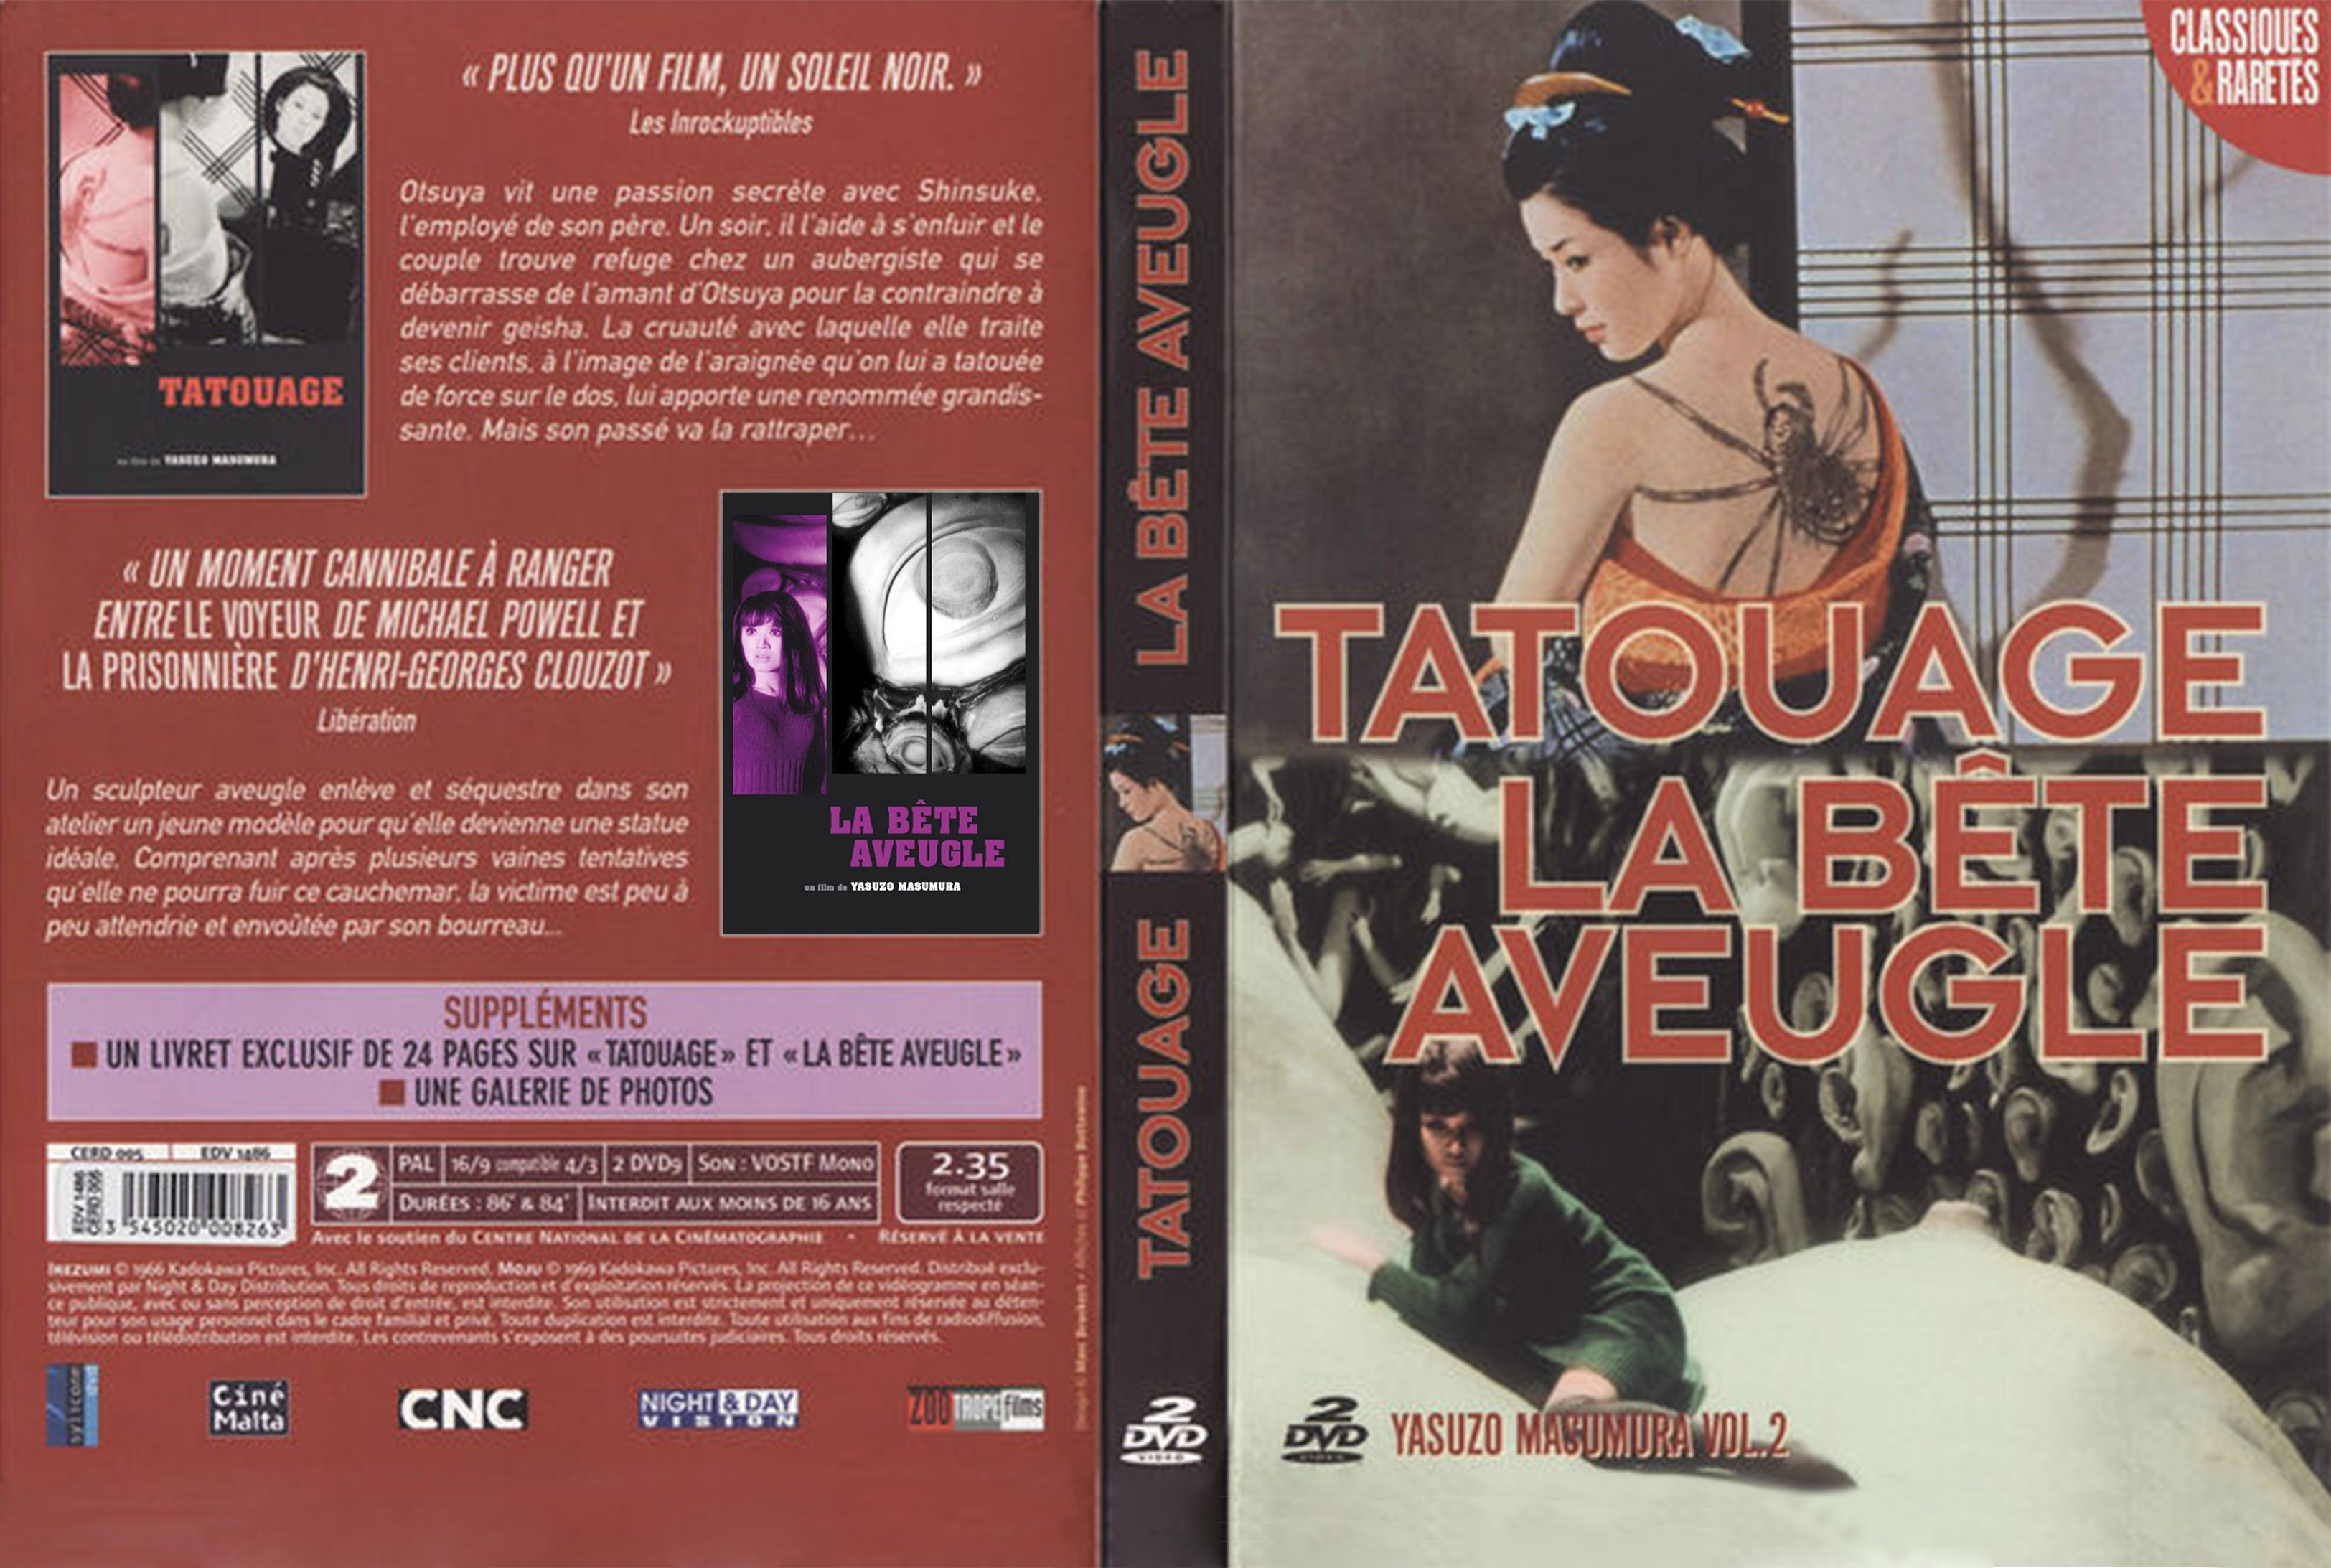 Jaquette DVD La bete aveugle + tatouage